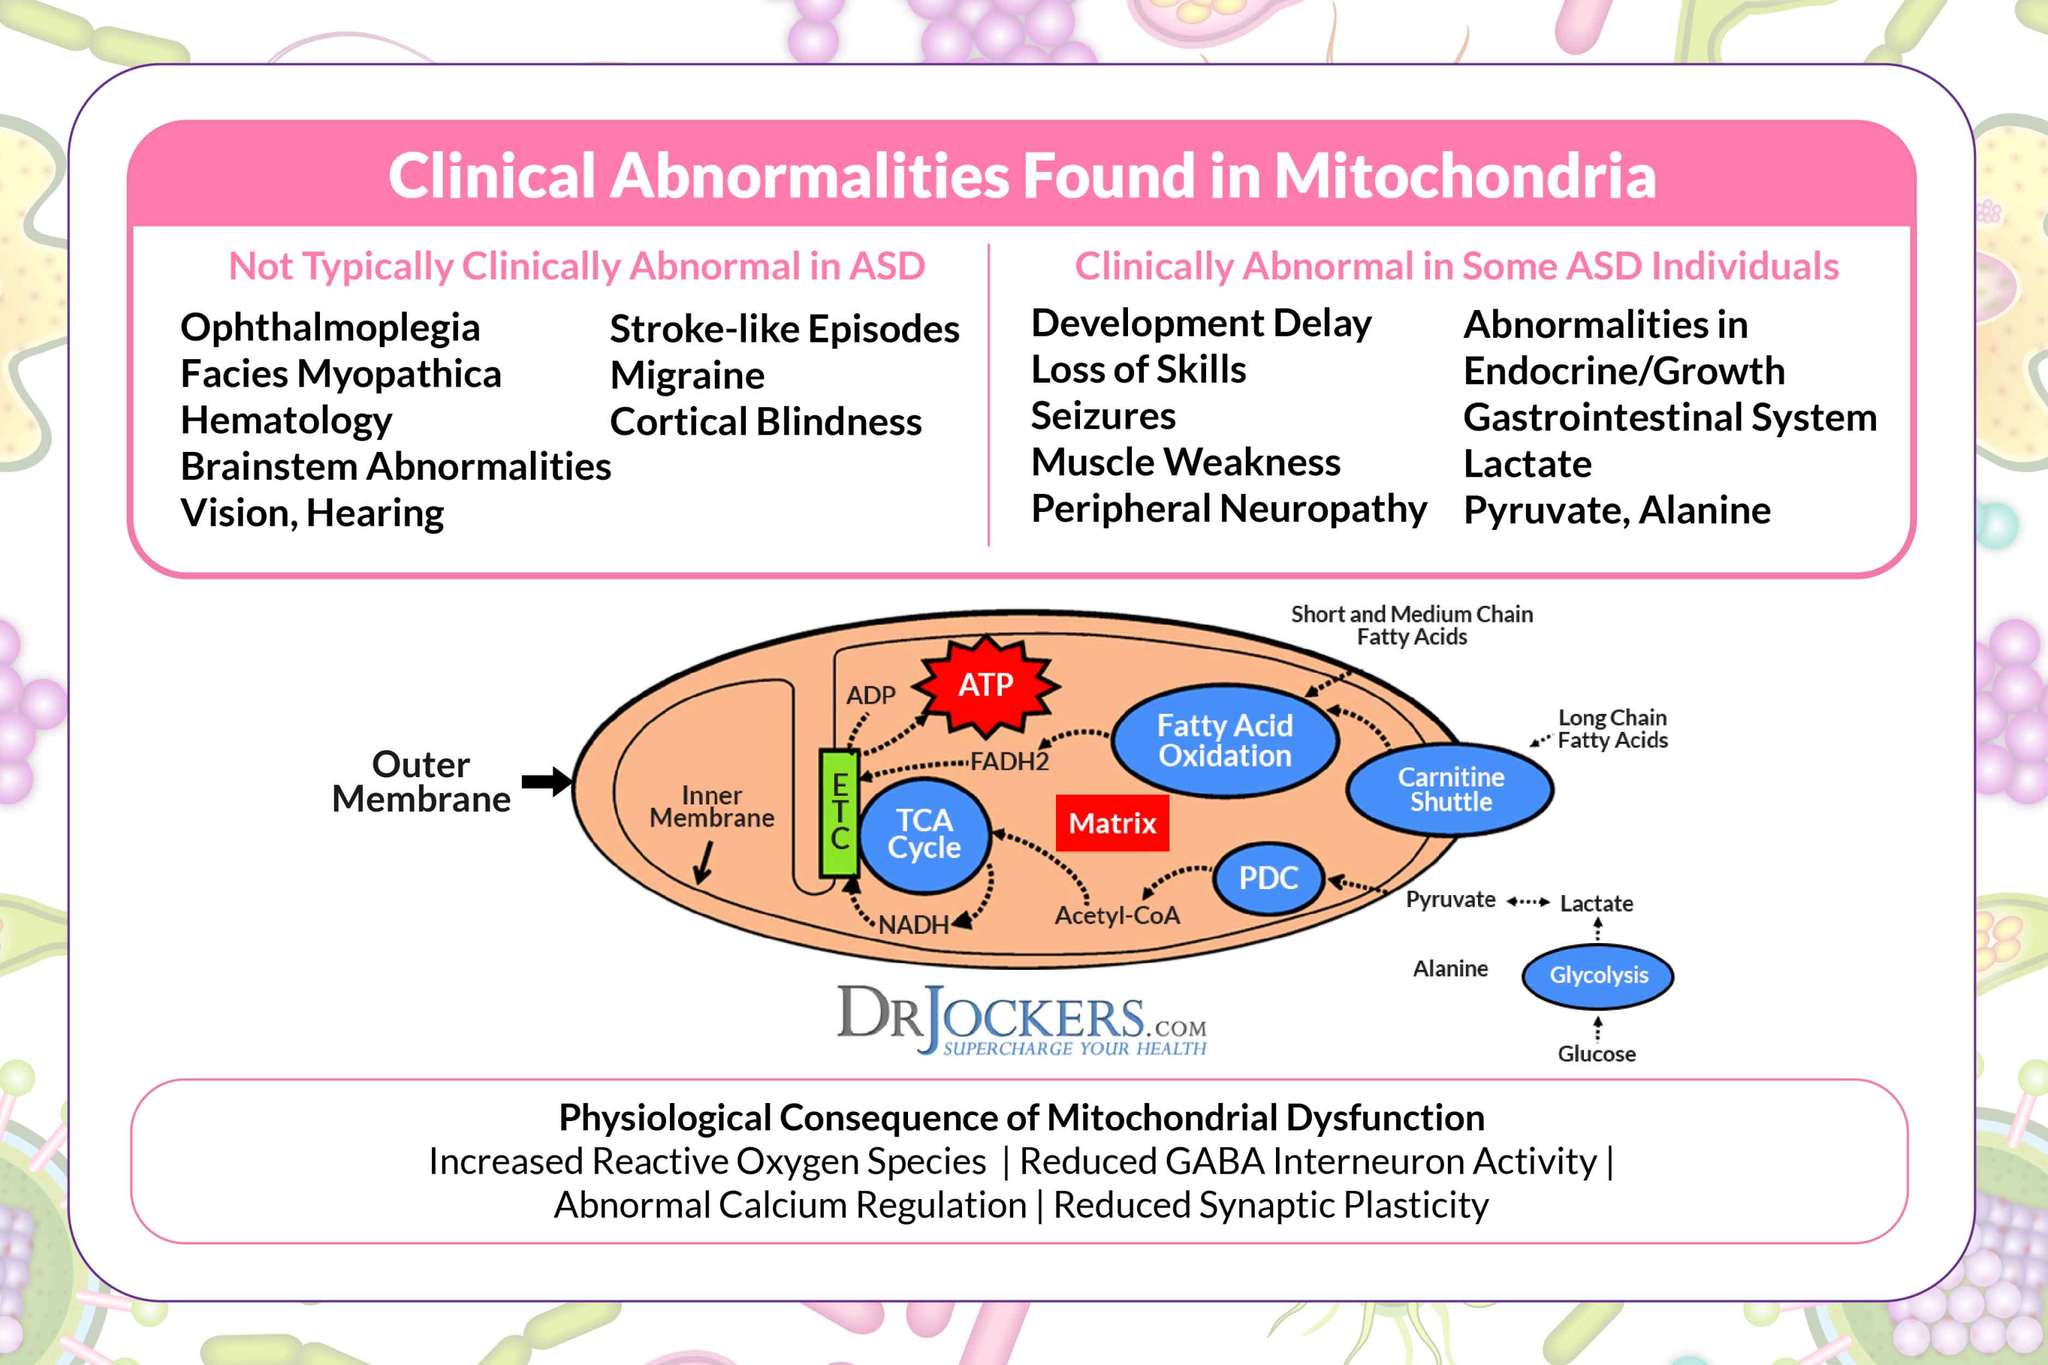 mitochondrial health, Mitochondrial Health: 5 Ways to Improve Cellular Energy